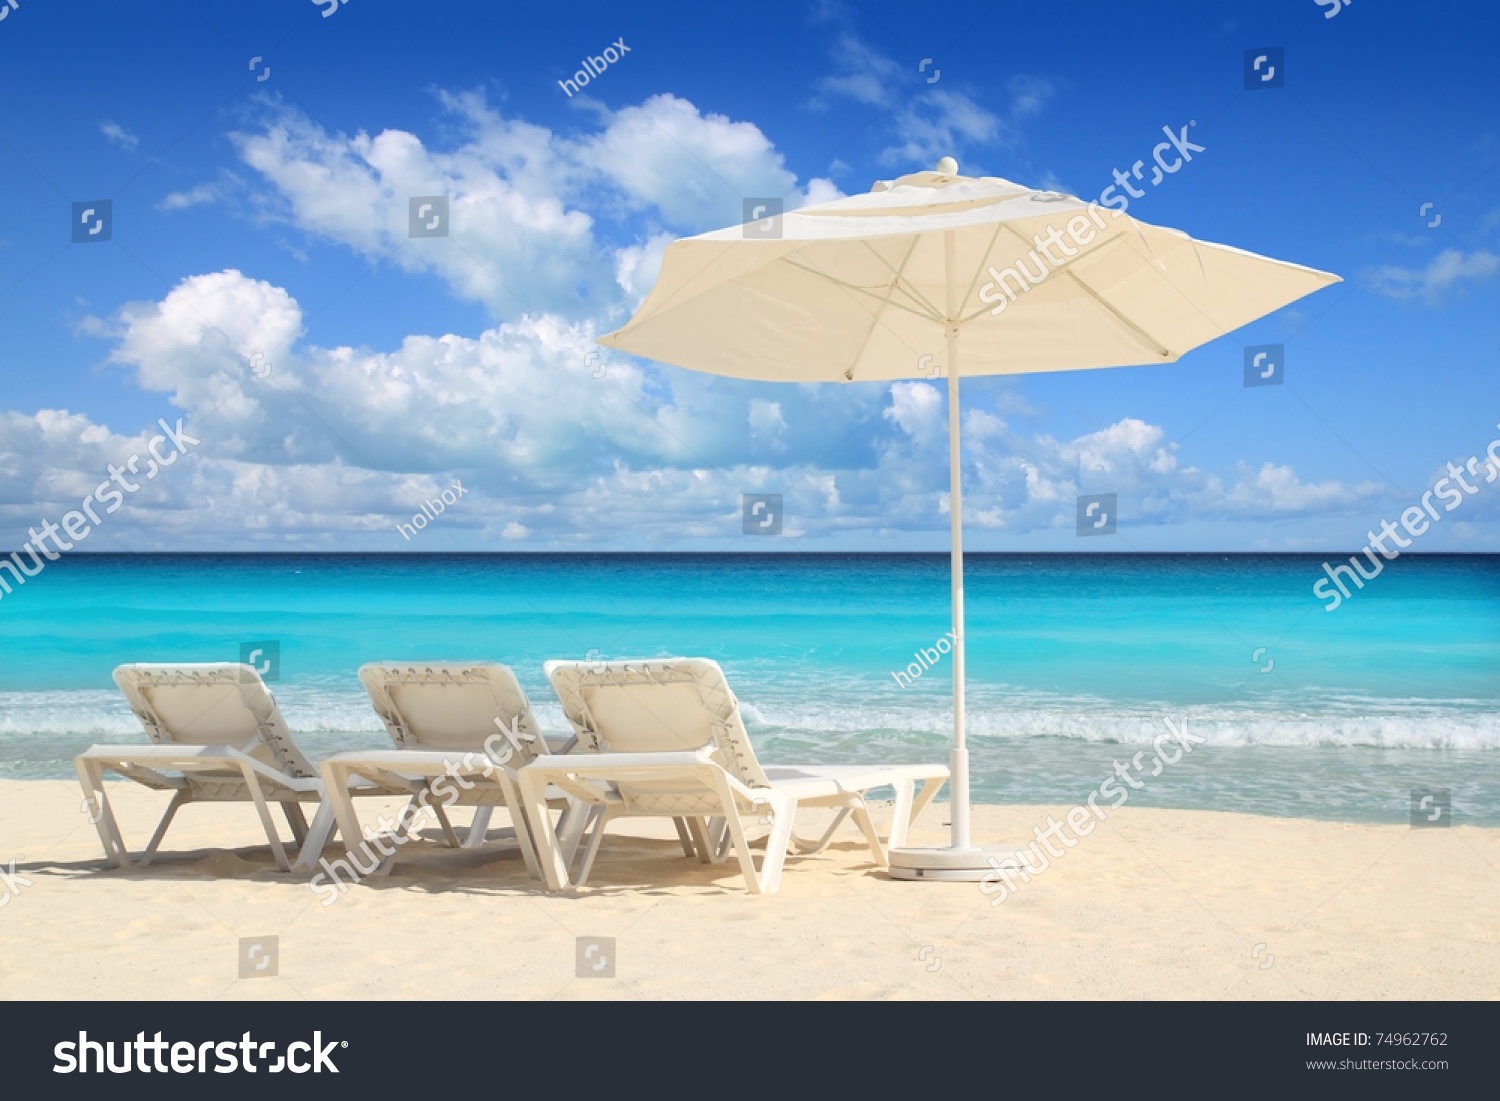 Caribbean beach parasol white umbrella and hammocks turquoise sea #74962762